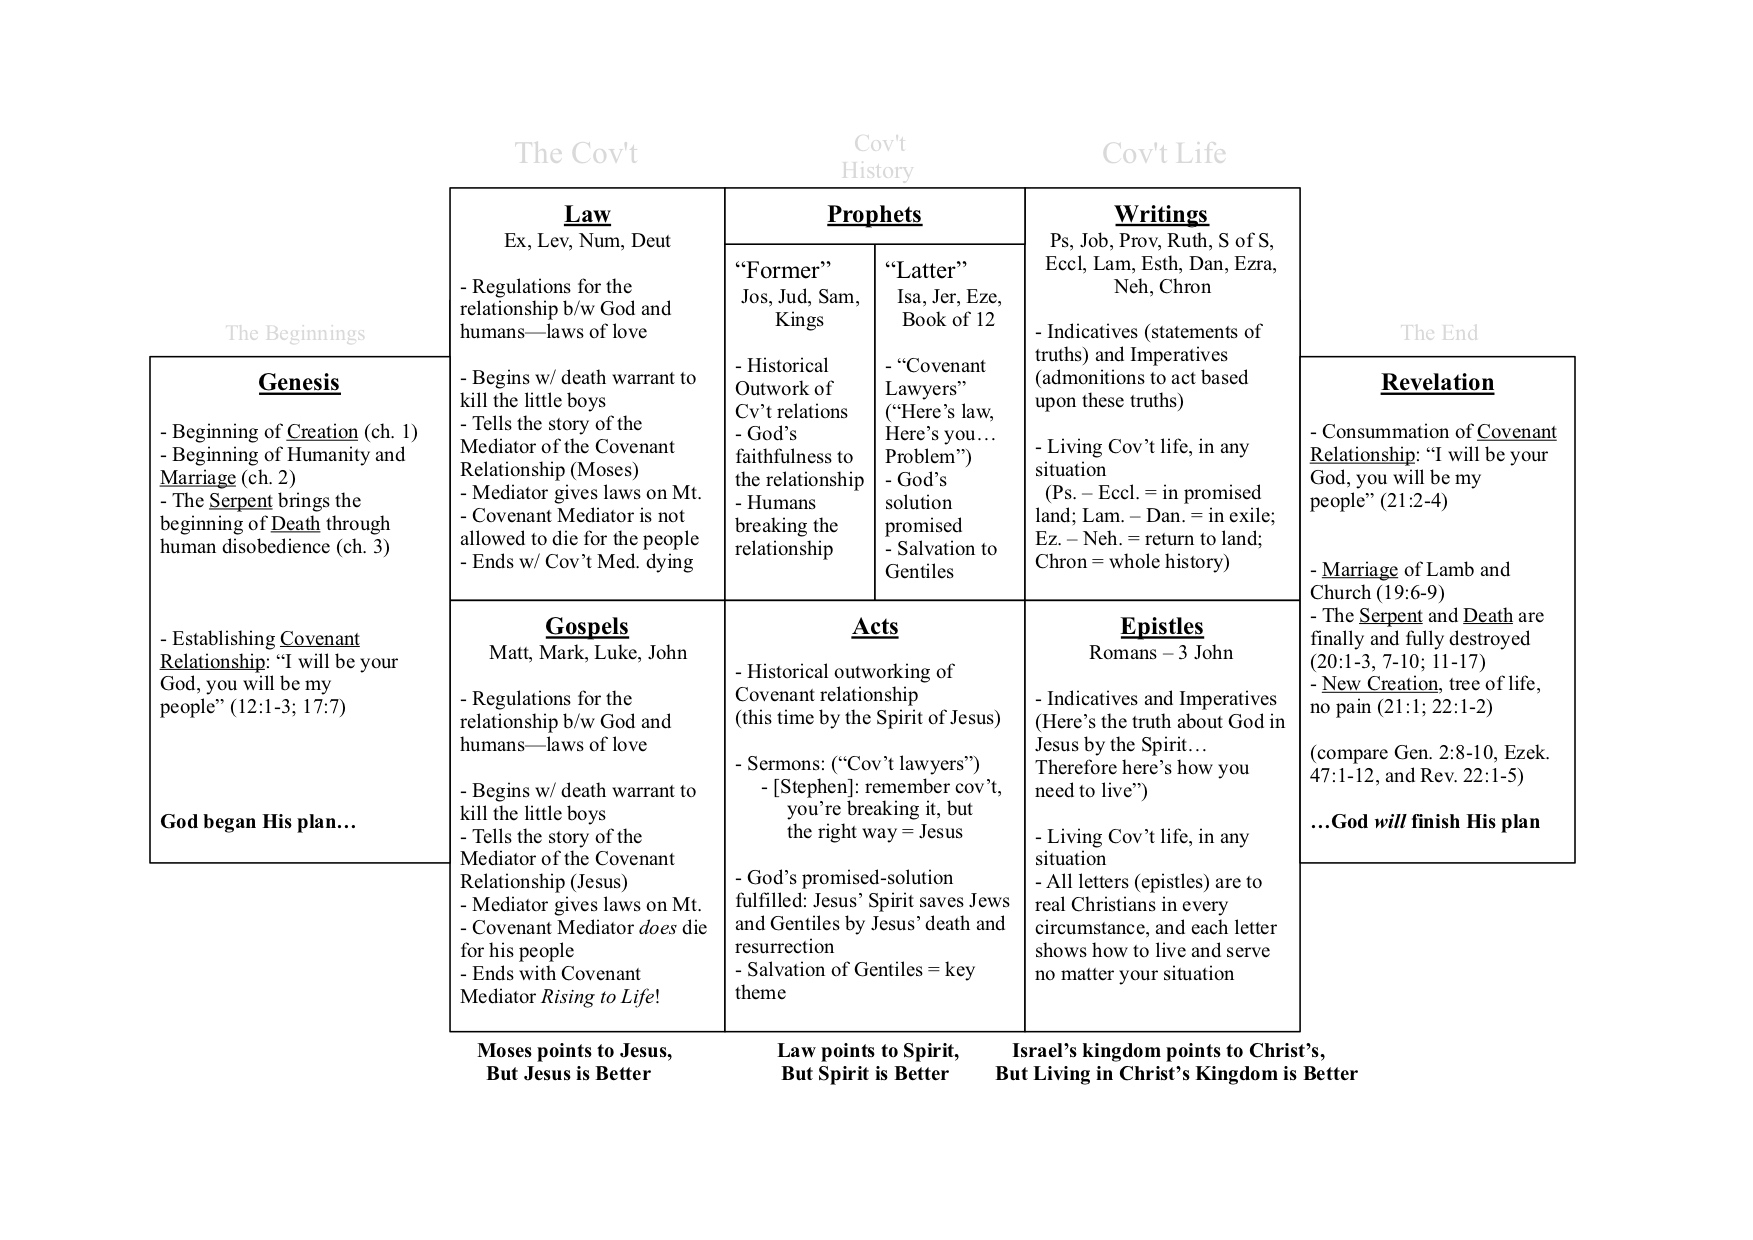 Bible Canon Chart